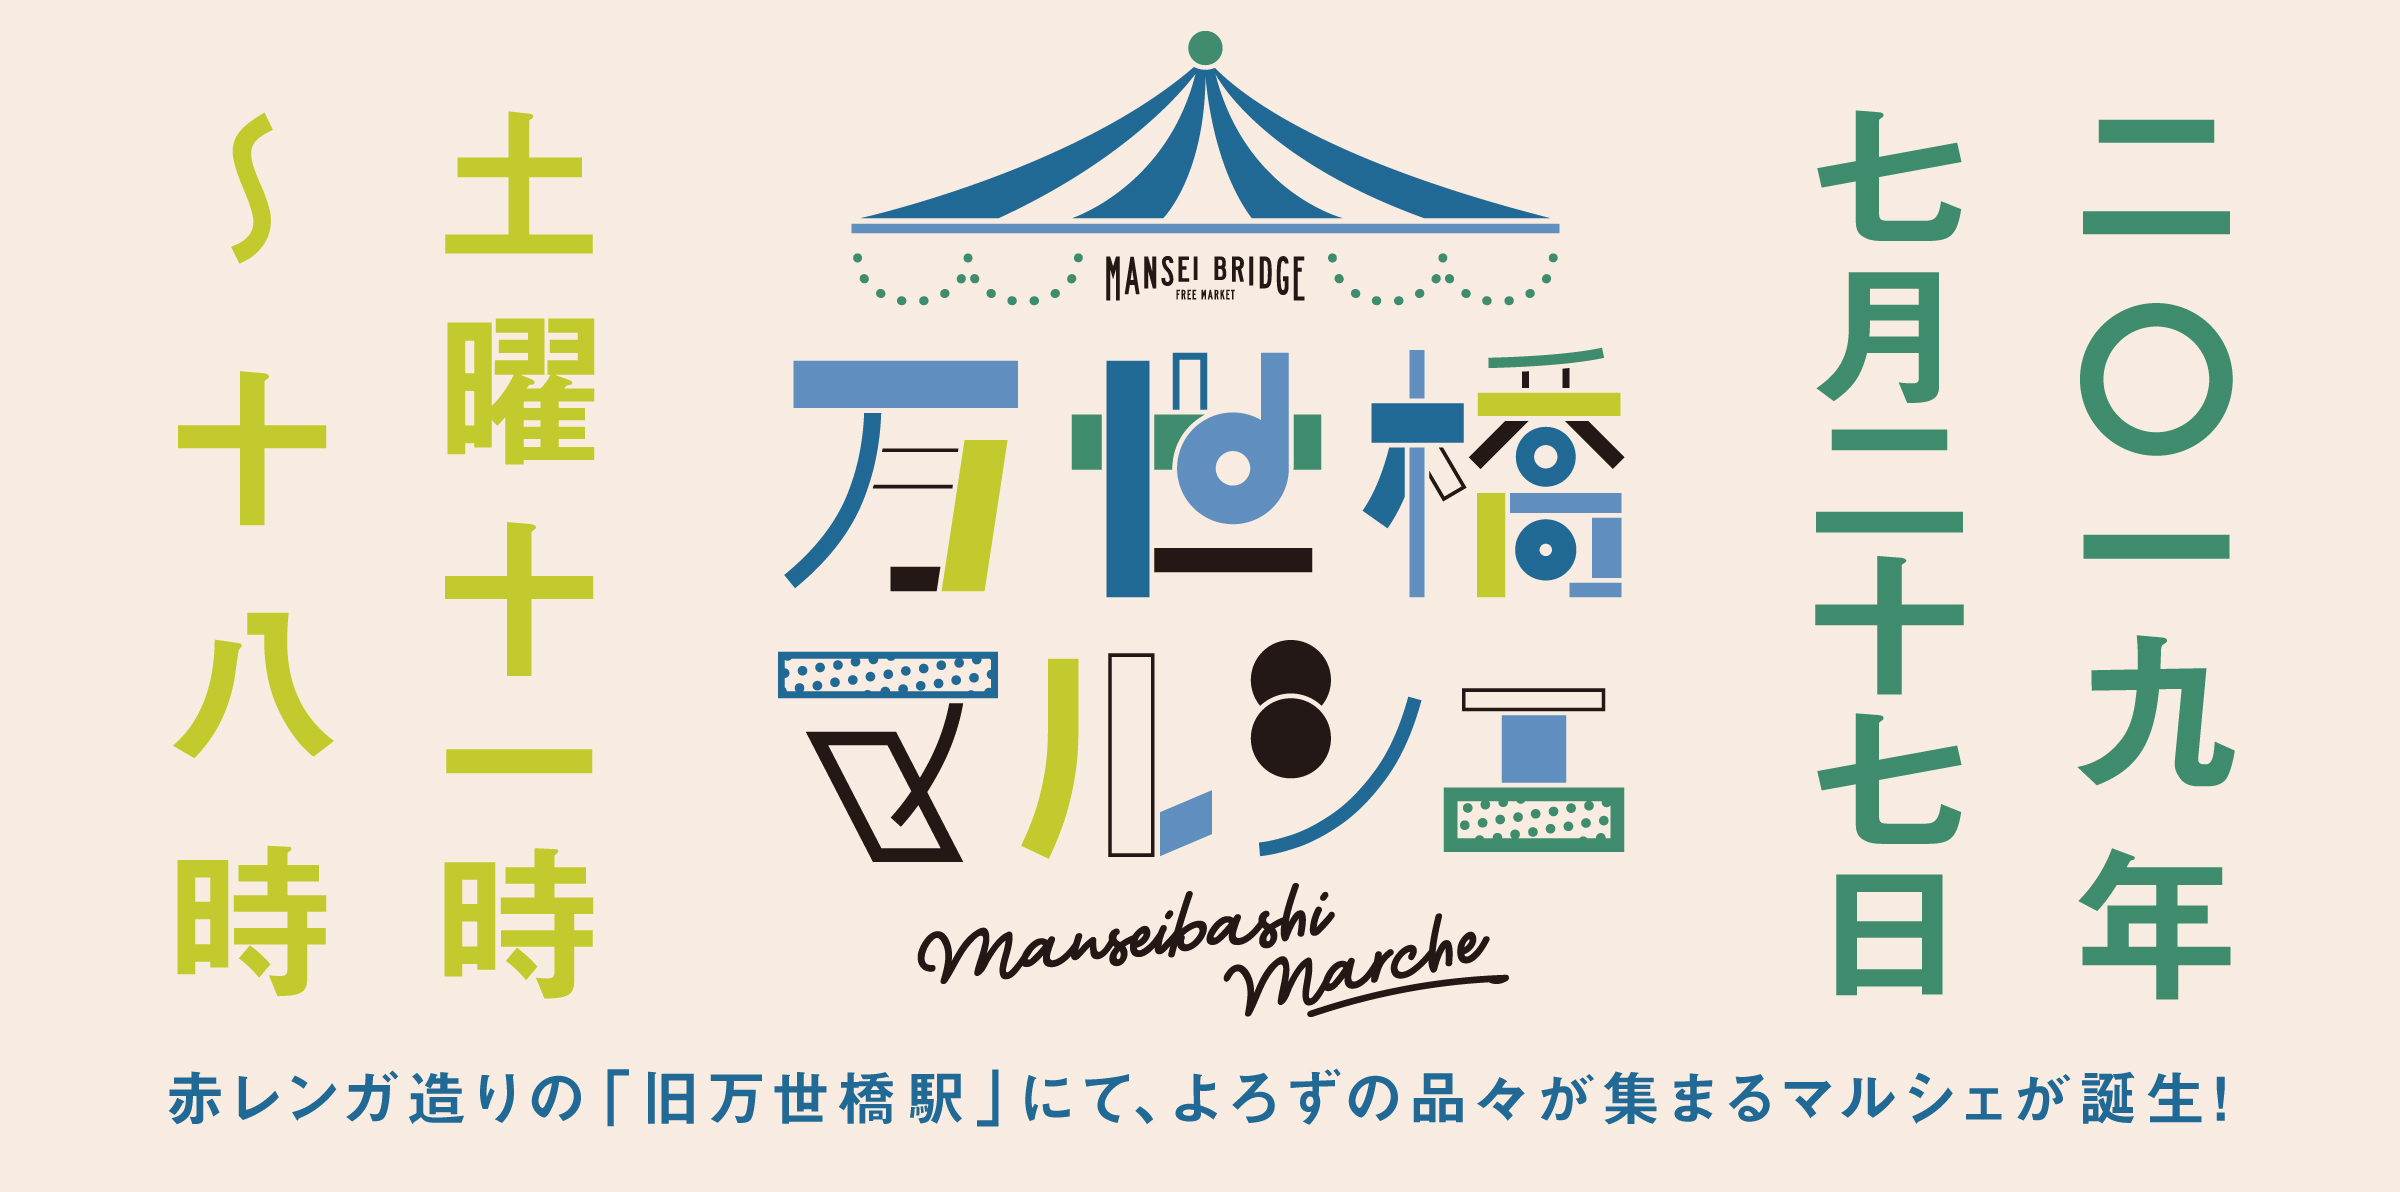 Manseibashi marche consumer hp 07